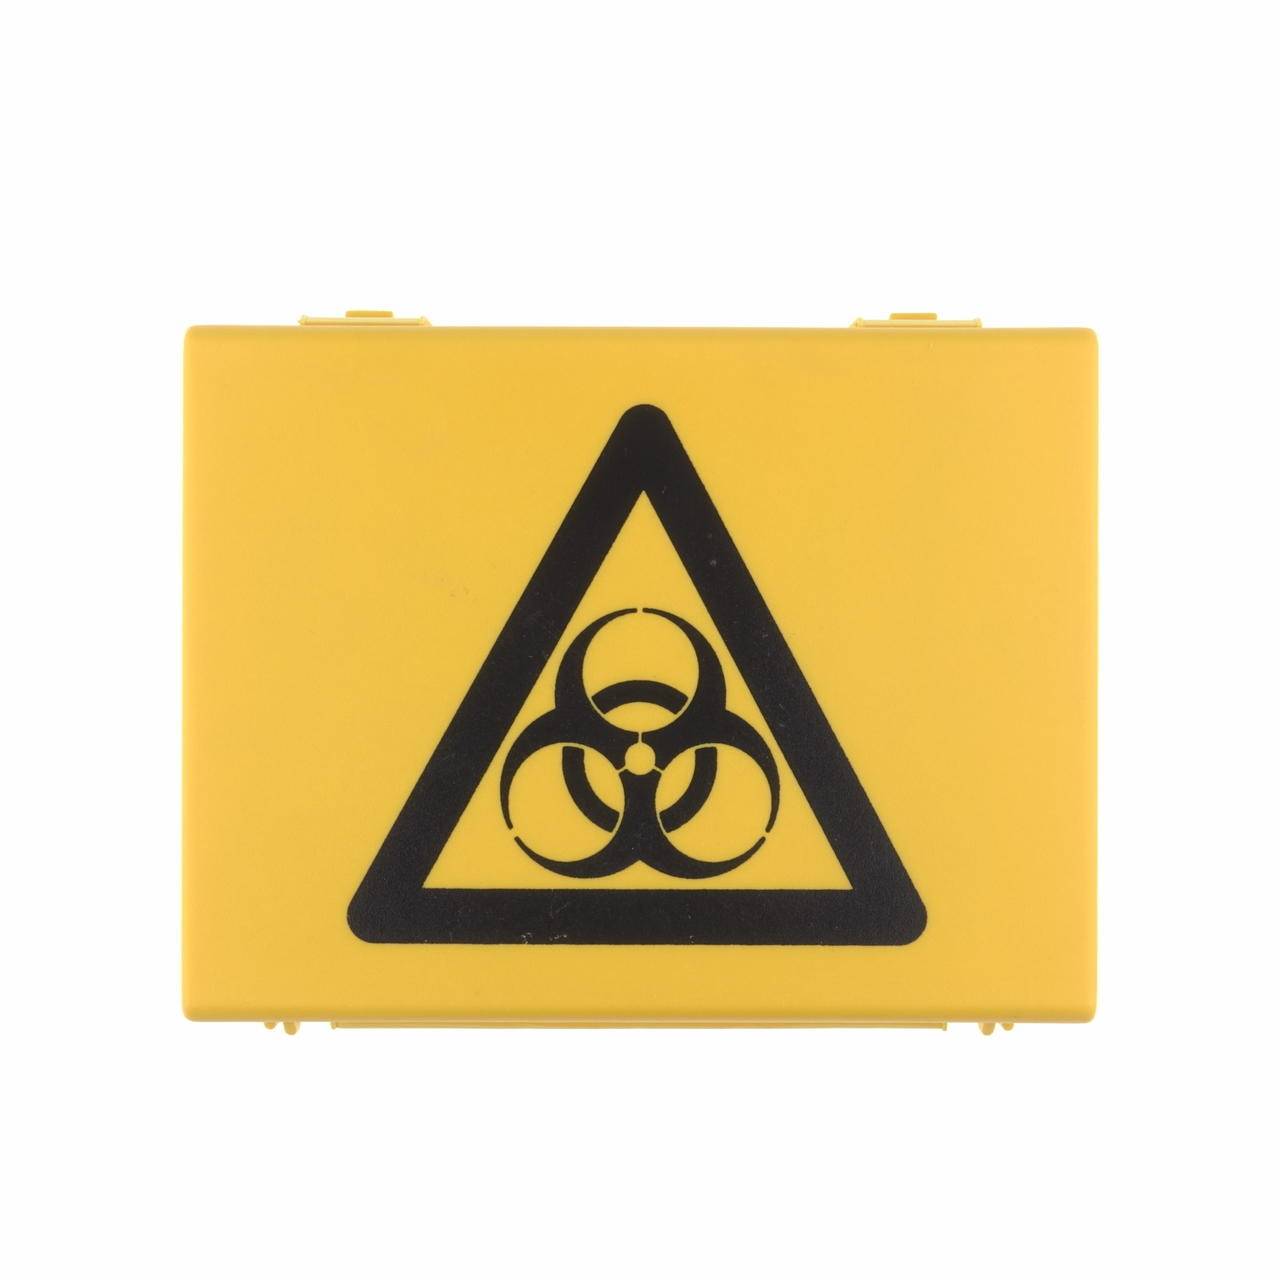 Biohazard Disposal Kit x 1 (Boxed) - UKMEDI